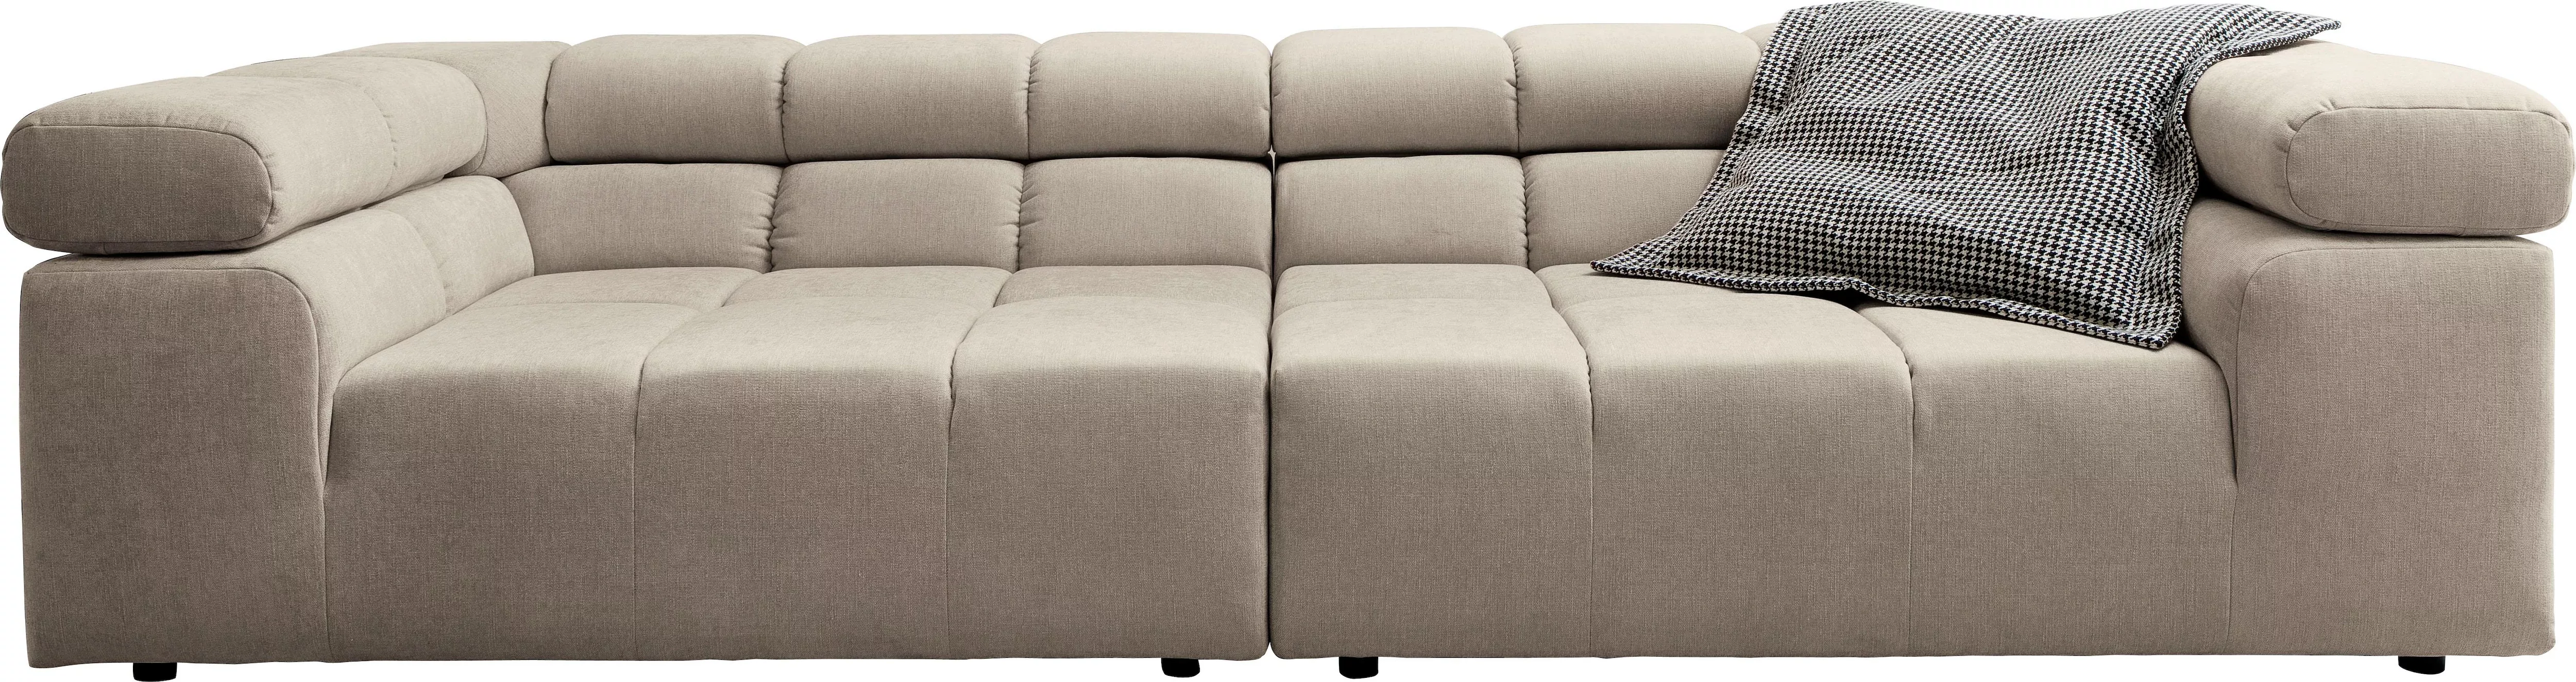 INOSIGN Big-Sofa Ancona B/T/H: 290/110/70 cm, auffällige Steppung, inkl. 2 günstig online kaufen